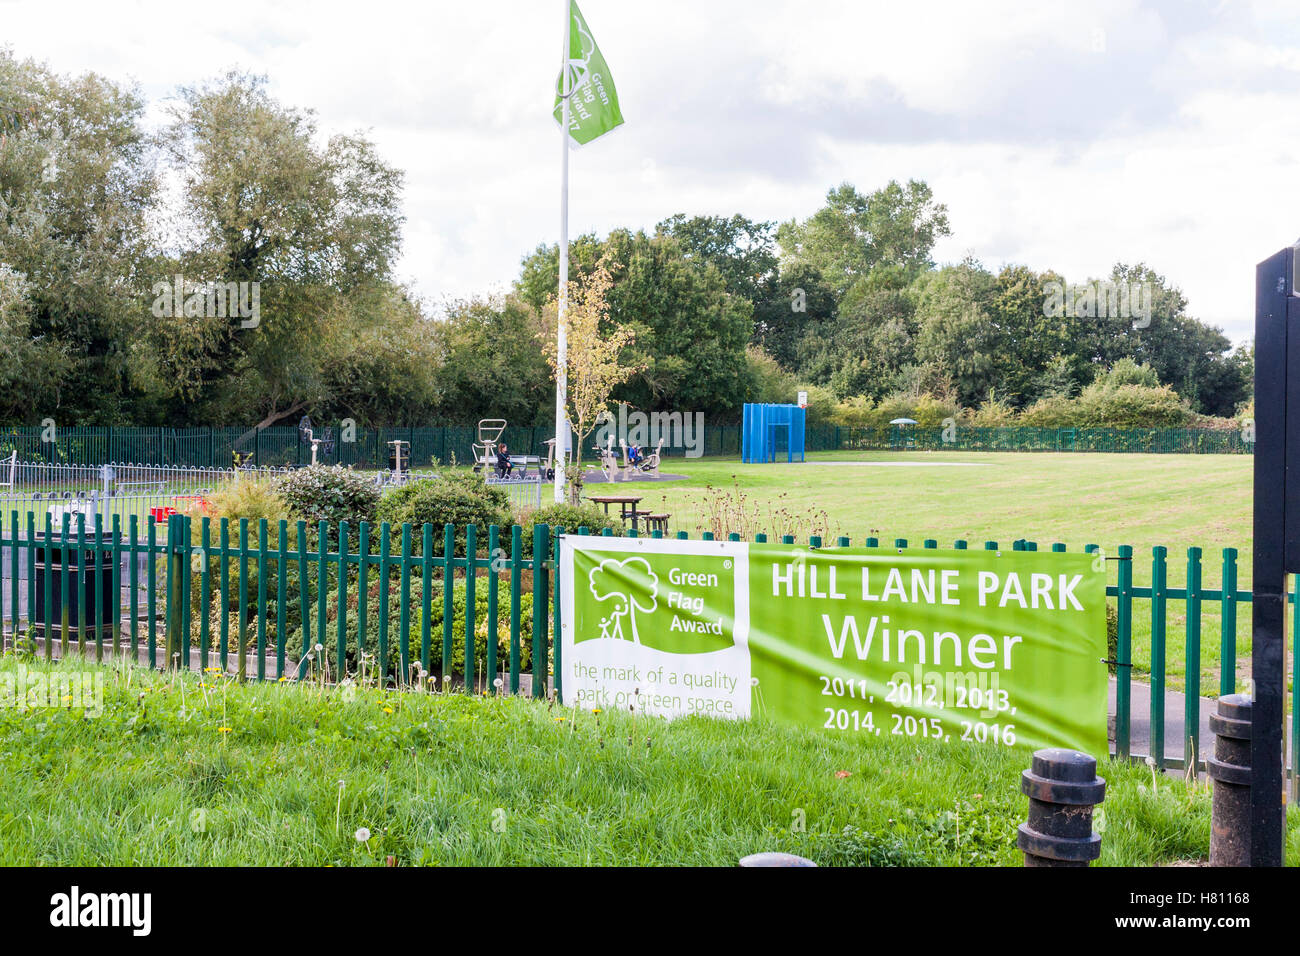 Hill Lane Park, winner of the Green Flag Award, displaying the banner. Ruislip, Hillingdon, Greater London, UK Stock Photo